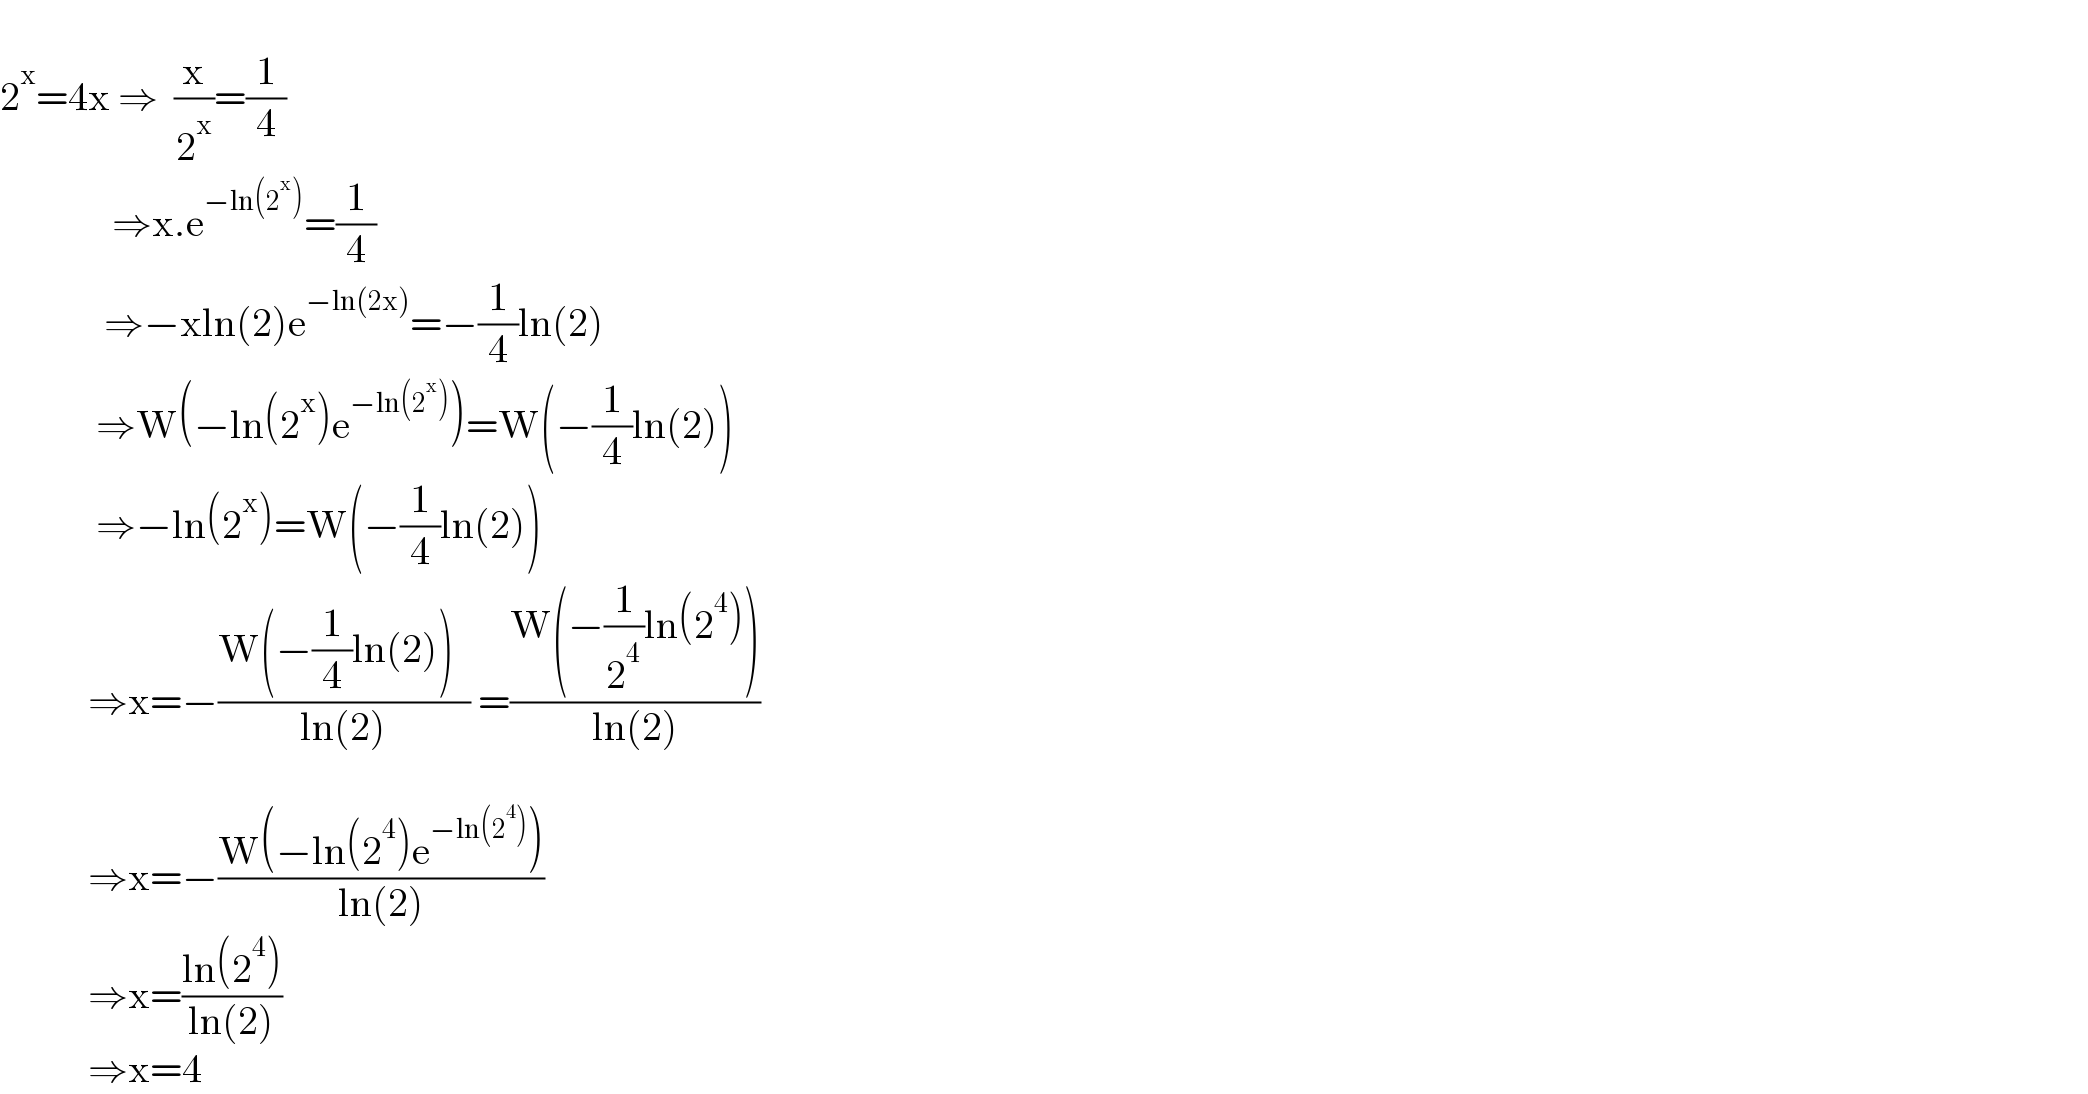   2^x =4x ⇒  (x/2^x )=(1/4)                      ⇒x.e^(−ln(2^x )) =(1/4)               ⇒−xln(2)e^(−ln(2x)) =−(1/4)ln(2)              ⇒W(−ln(2^x )e^(−ln(2^x )) )=W(−(1/4)ln(2))              ⇒−ln(2^x )=W(−(1/4)ln(2))             ⇒x=−((W(−(1/4)ln(2))  )/(ln(2))) =((W(−(1/2^4 )ln(2^4 )))/(ln(2)))                        ⇒x=−((W(−ln(2^4 )e^(−ln(2^4 )) ))/(ln(2)))                   ⇒x=((ln(2^4 ))/(ln(2)))             ⇒x=4  